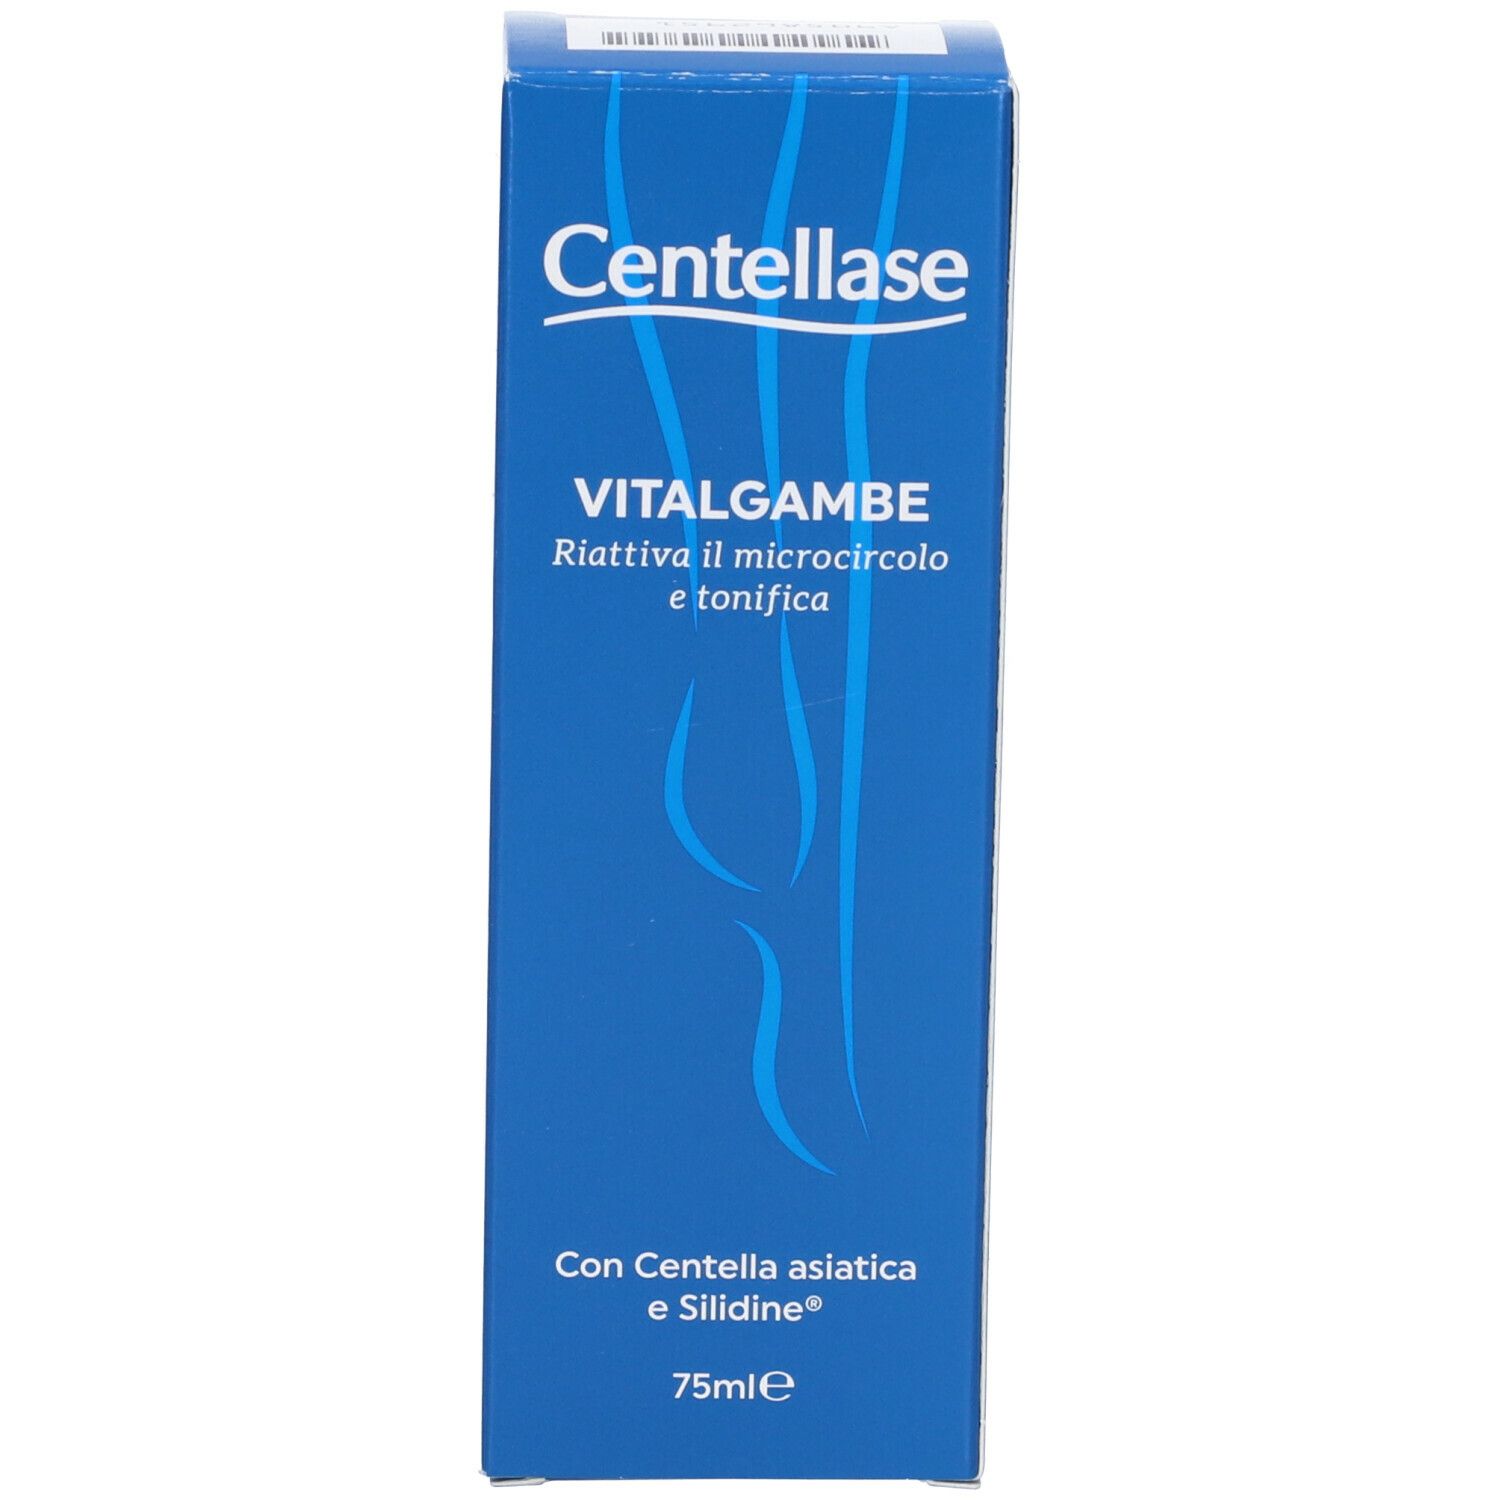 Centellase® Vital Gambe